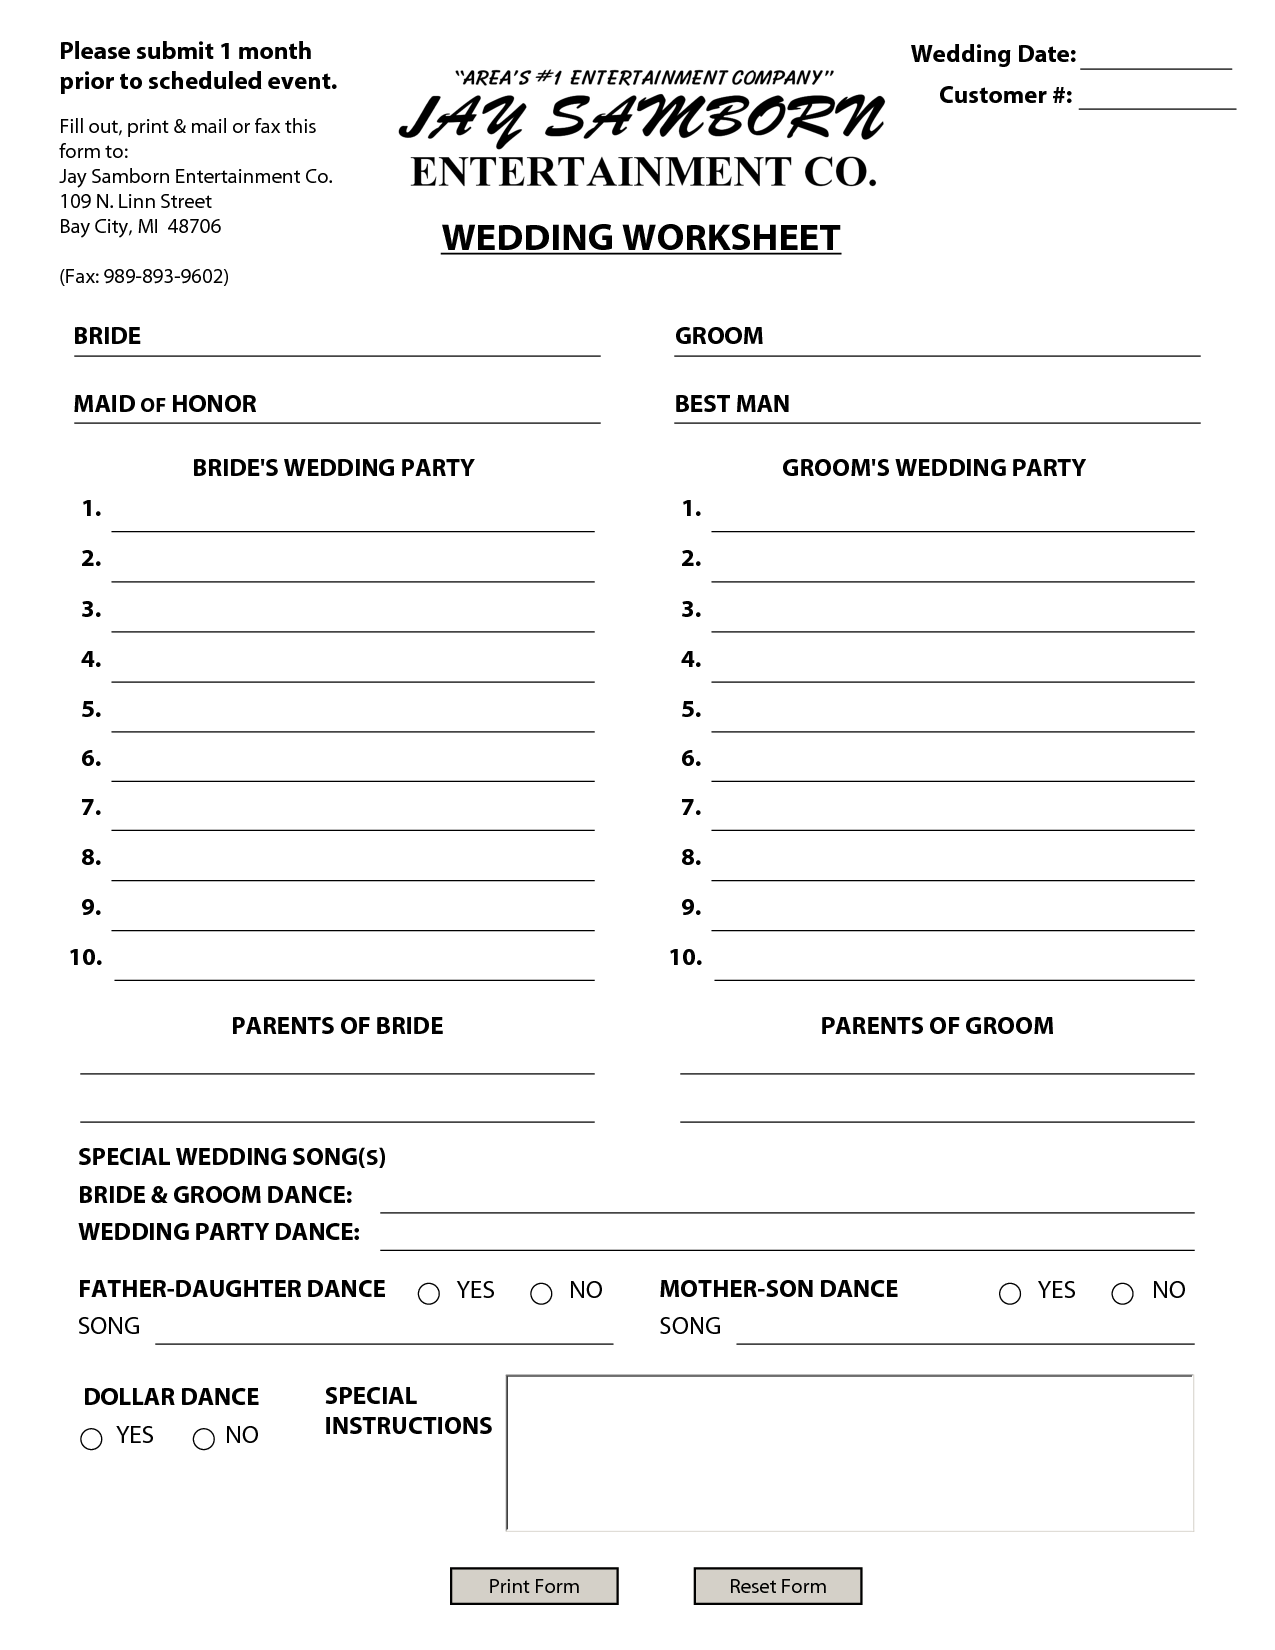 Best Images Of Free Printable Wedding Planner Worksheets Wedding